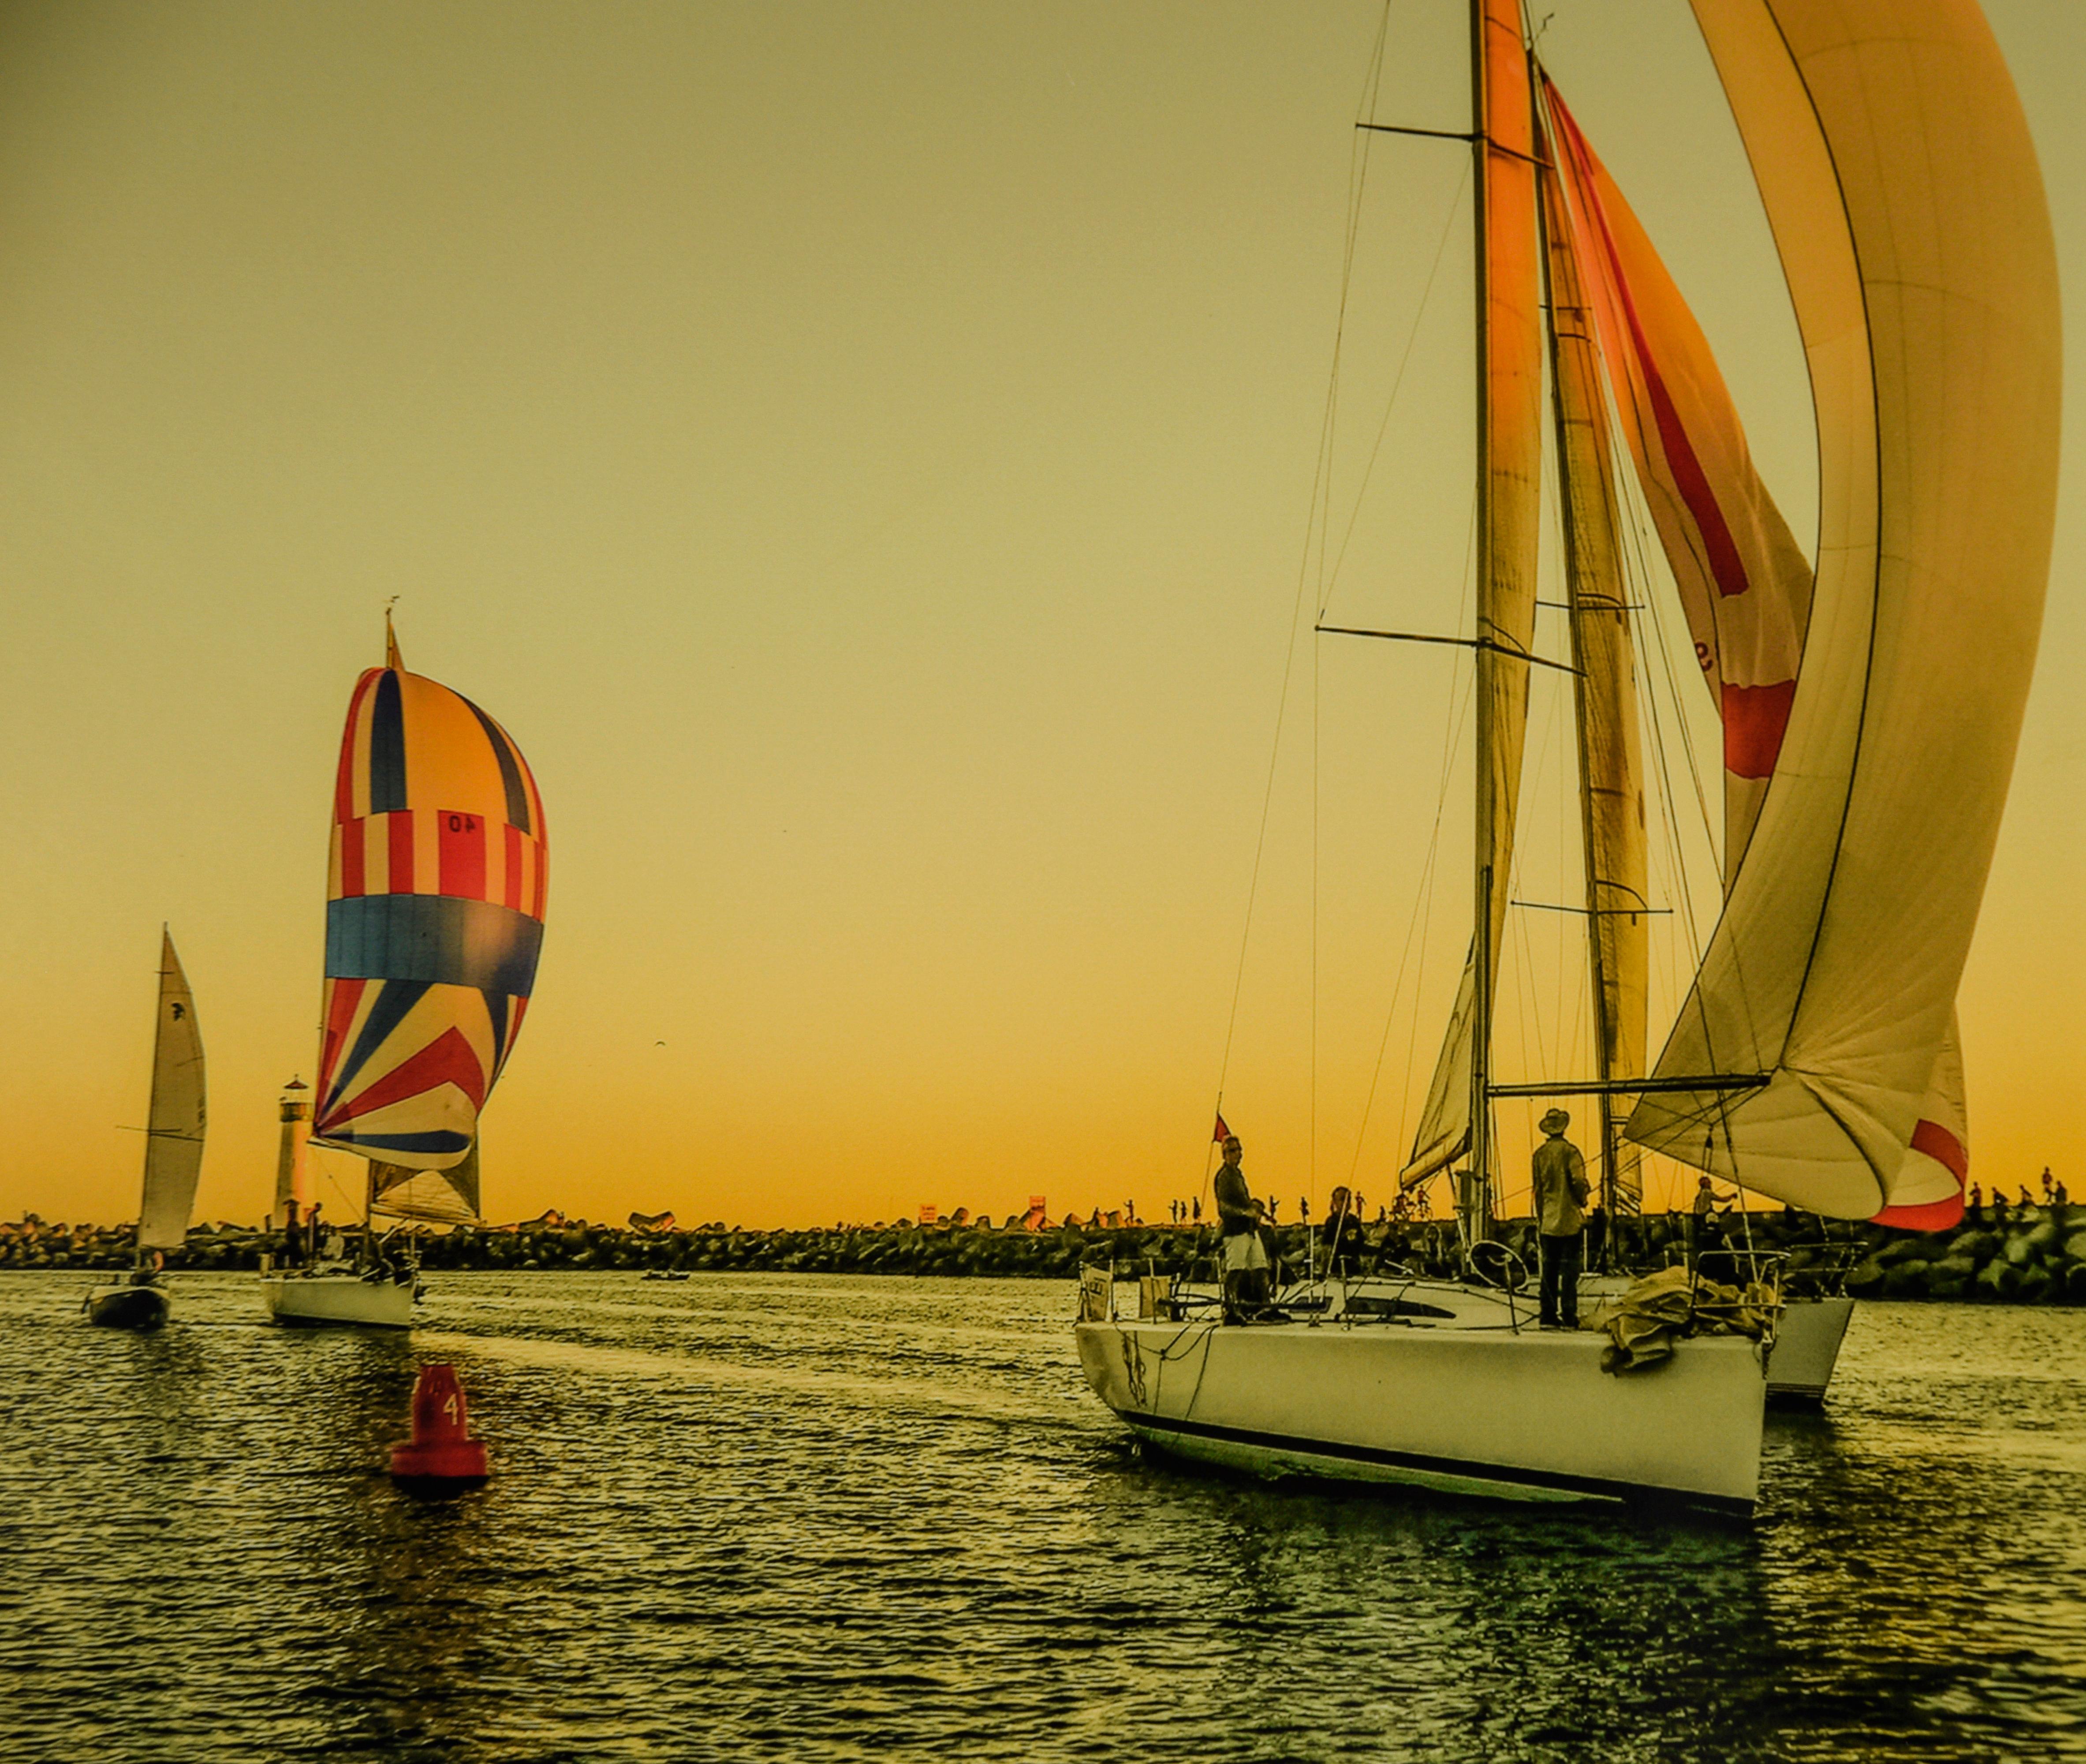 Boats Segeln bei Sonnenuntergang, Santa Cruz – Farbfotografie (Fotorealismus), Photograph, von John F. Hunter